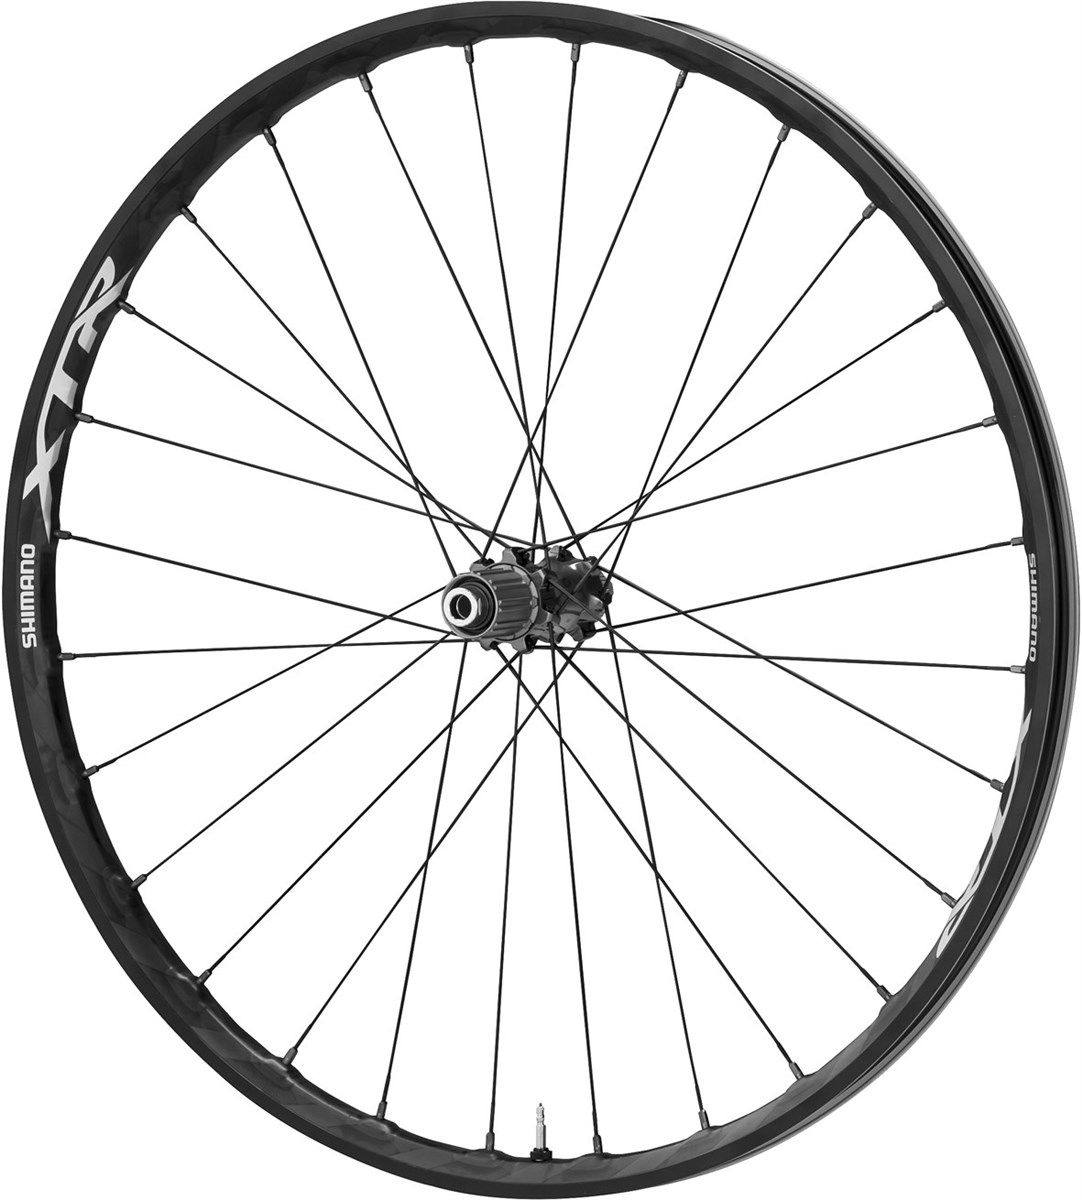 Shimano XTR 29er Rear Mountain Bike Wheel, 12 x 142mm Axle, Carbon Clincher product image